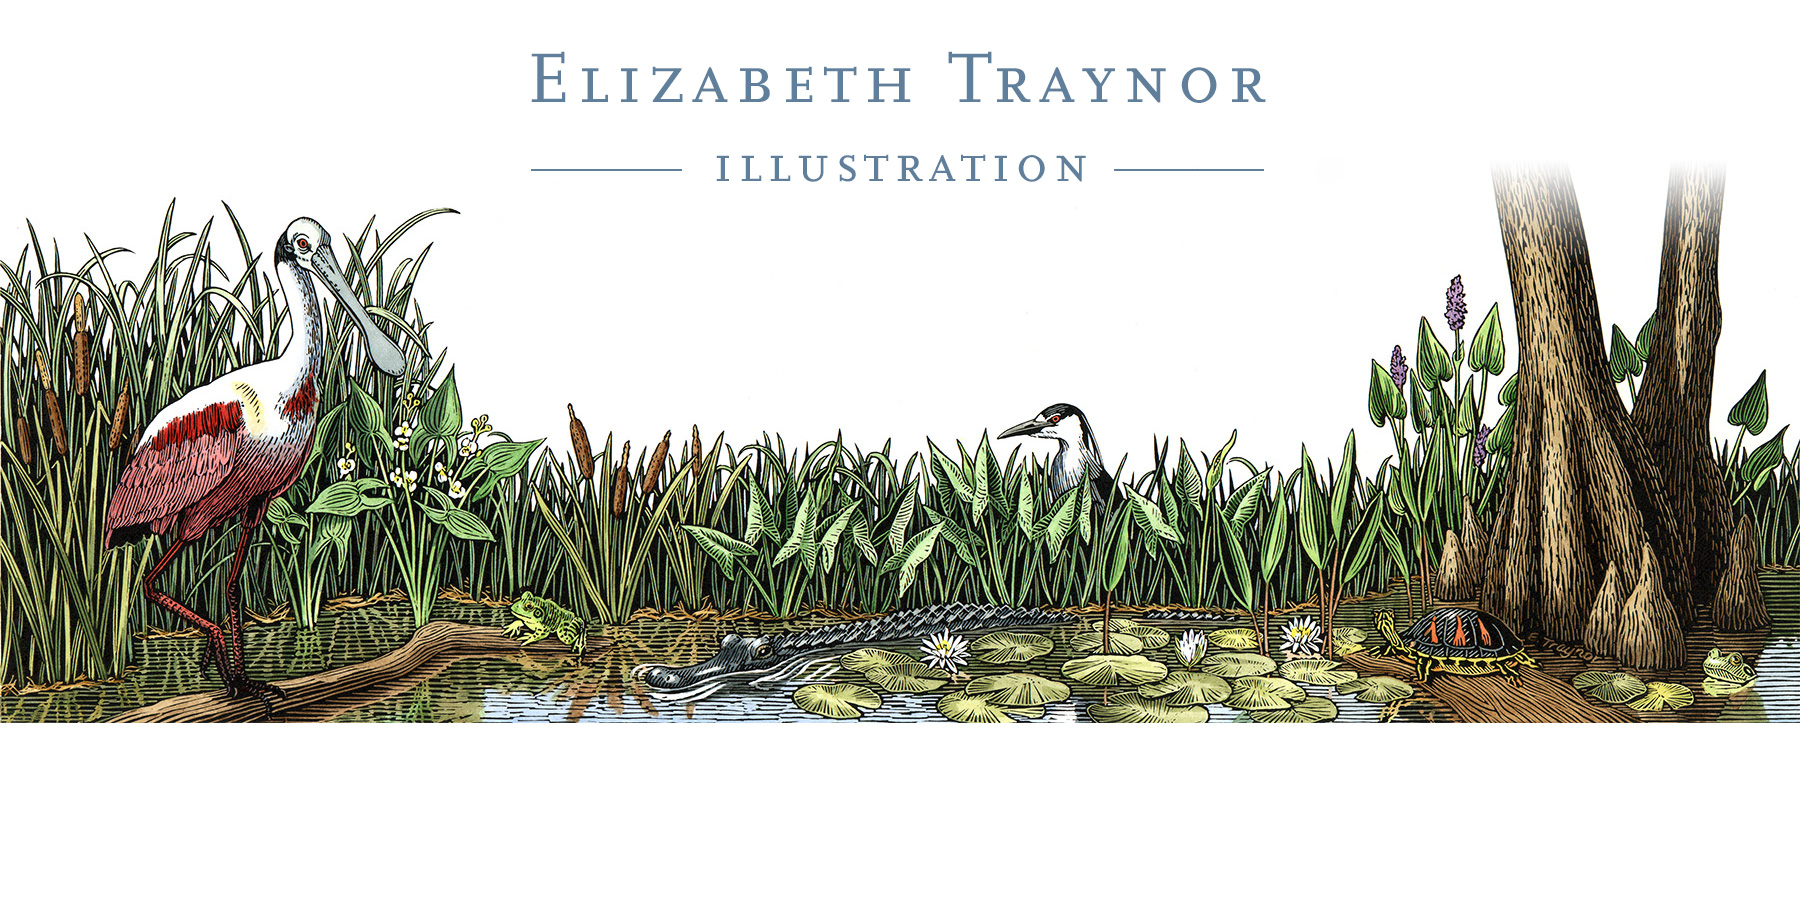 Elizabeth Traynor Illustration - Scratchboard Illustration, Swampland